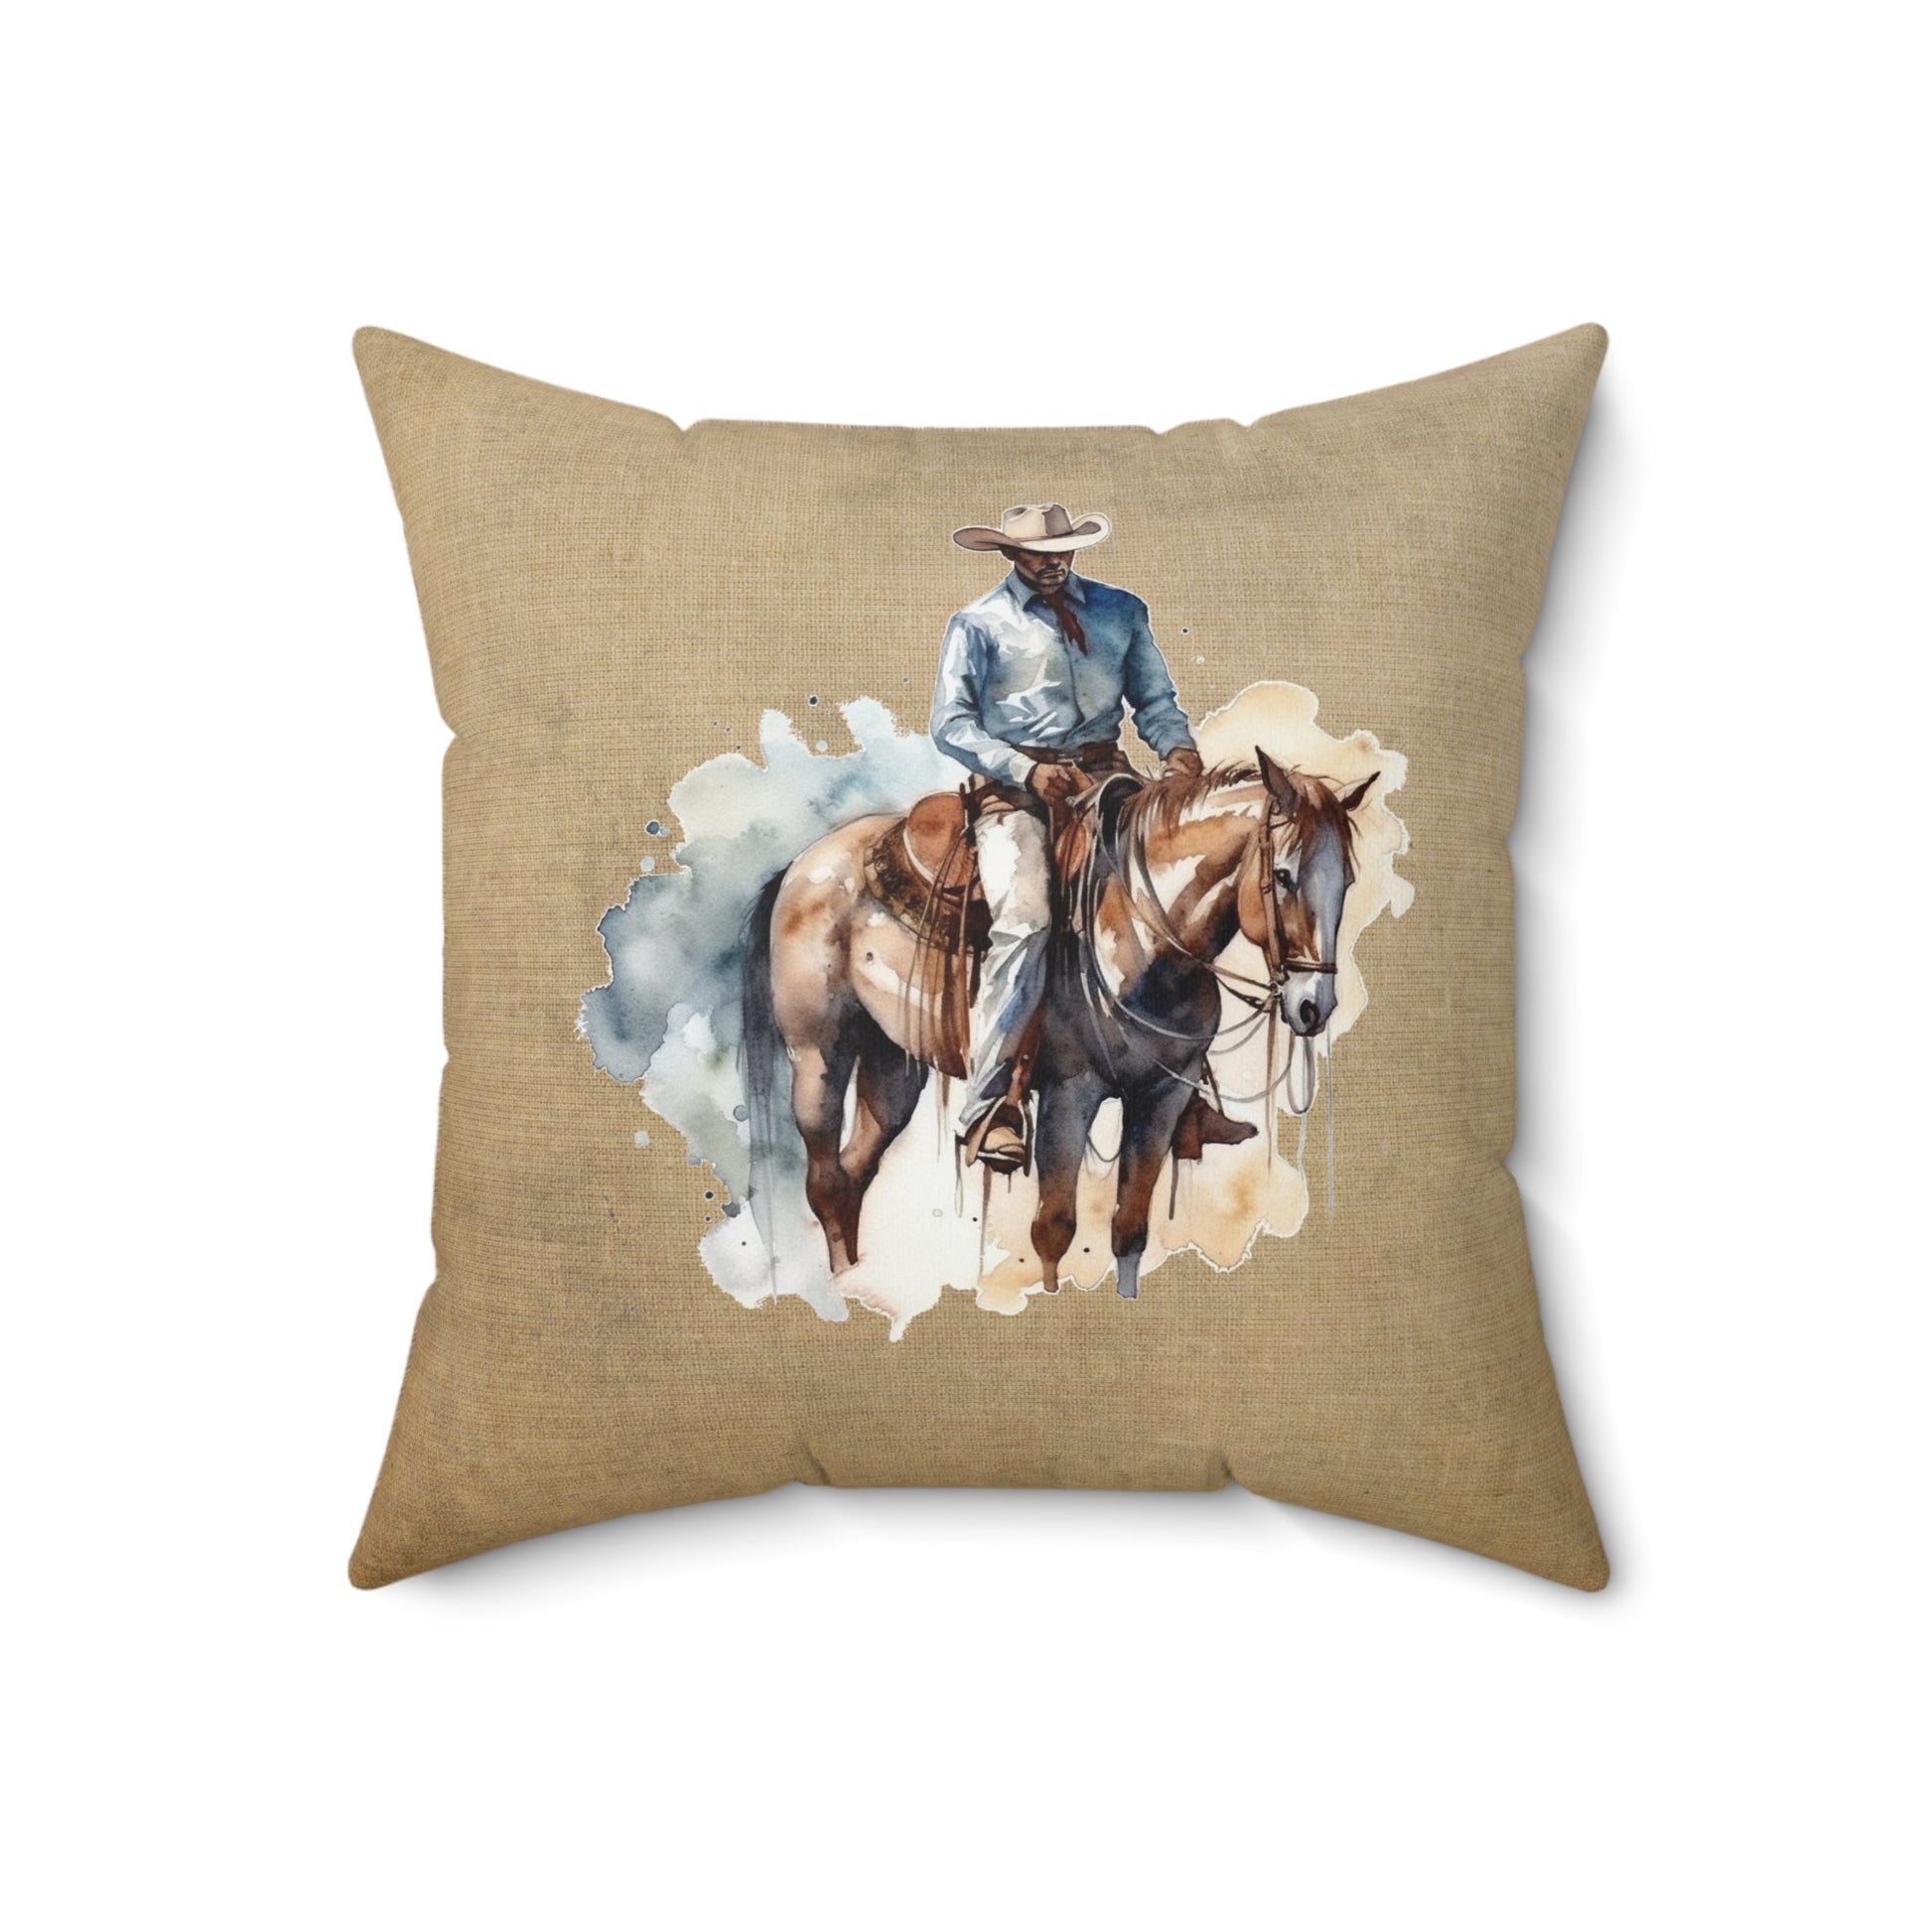 Cowboy Rider Standing Still Decorative Pillow | Original Watercolor Art | Indoor Throw Pillow Decor - FlooredByArt